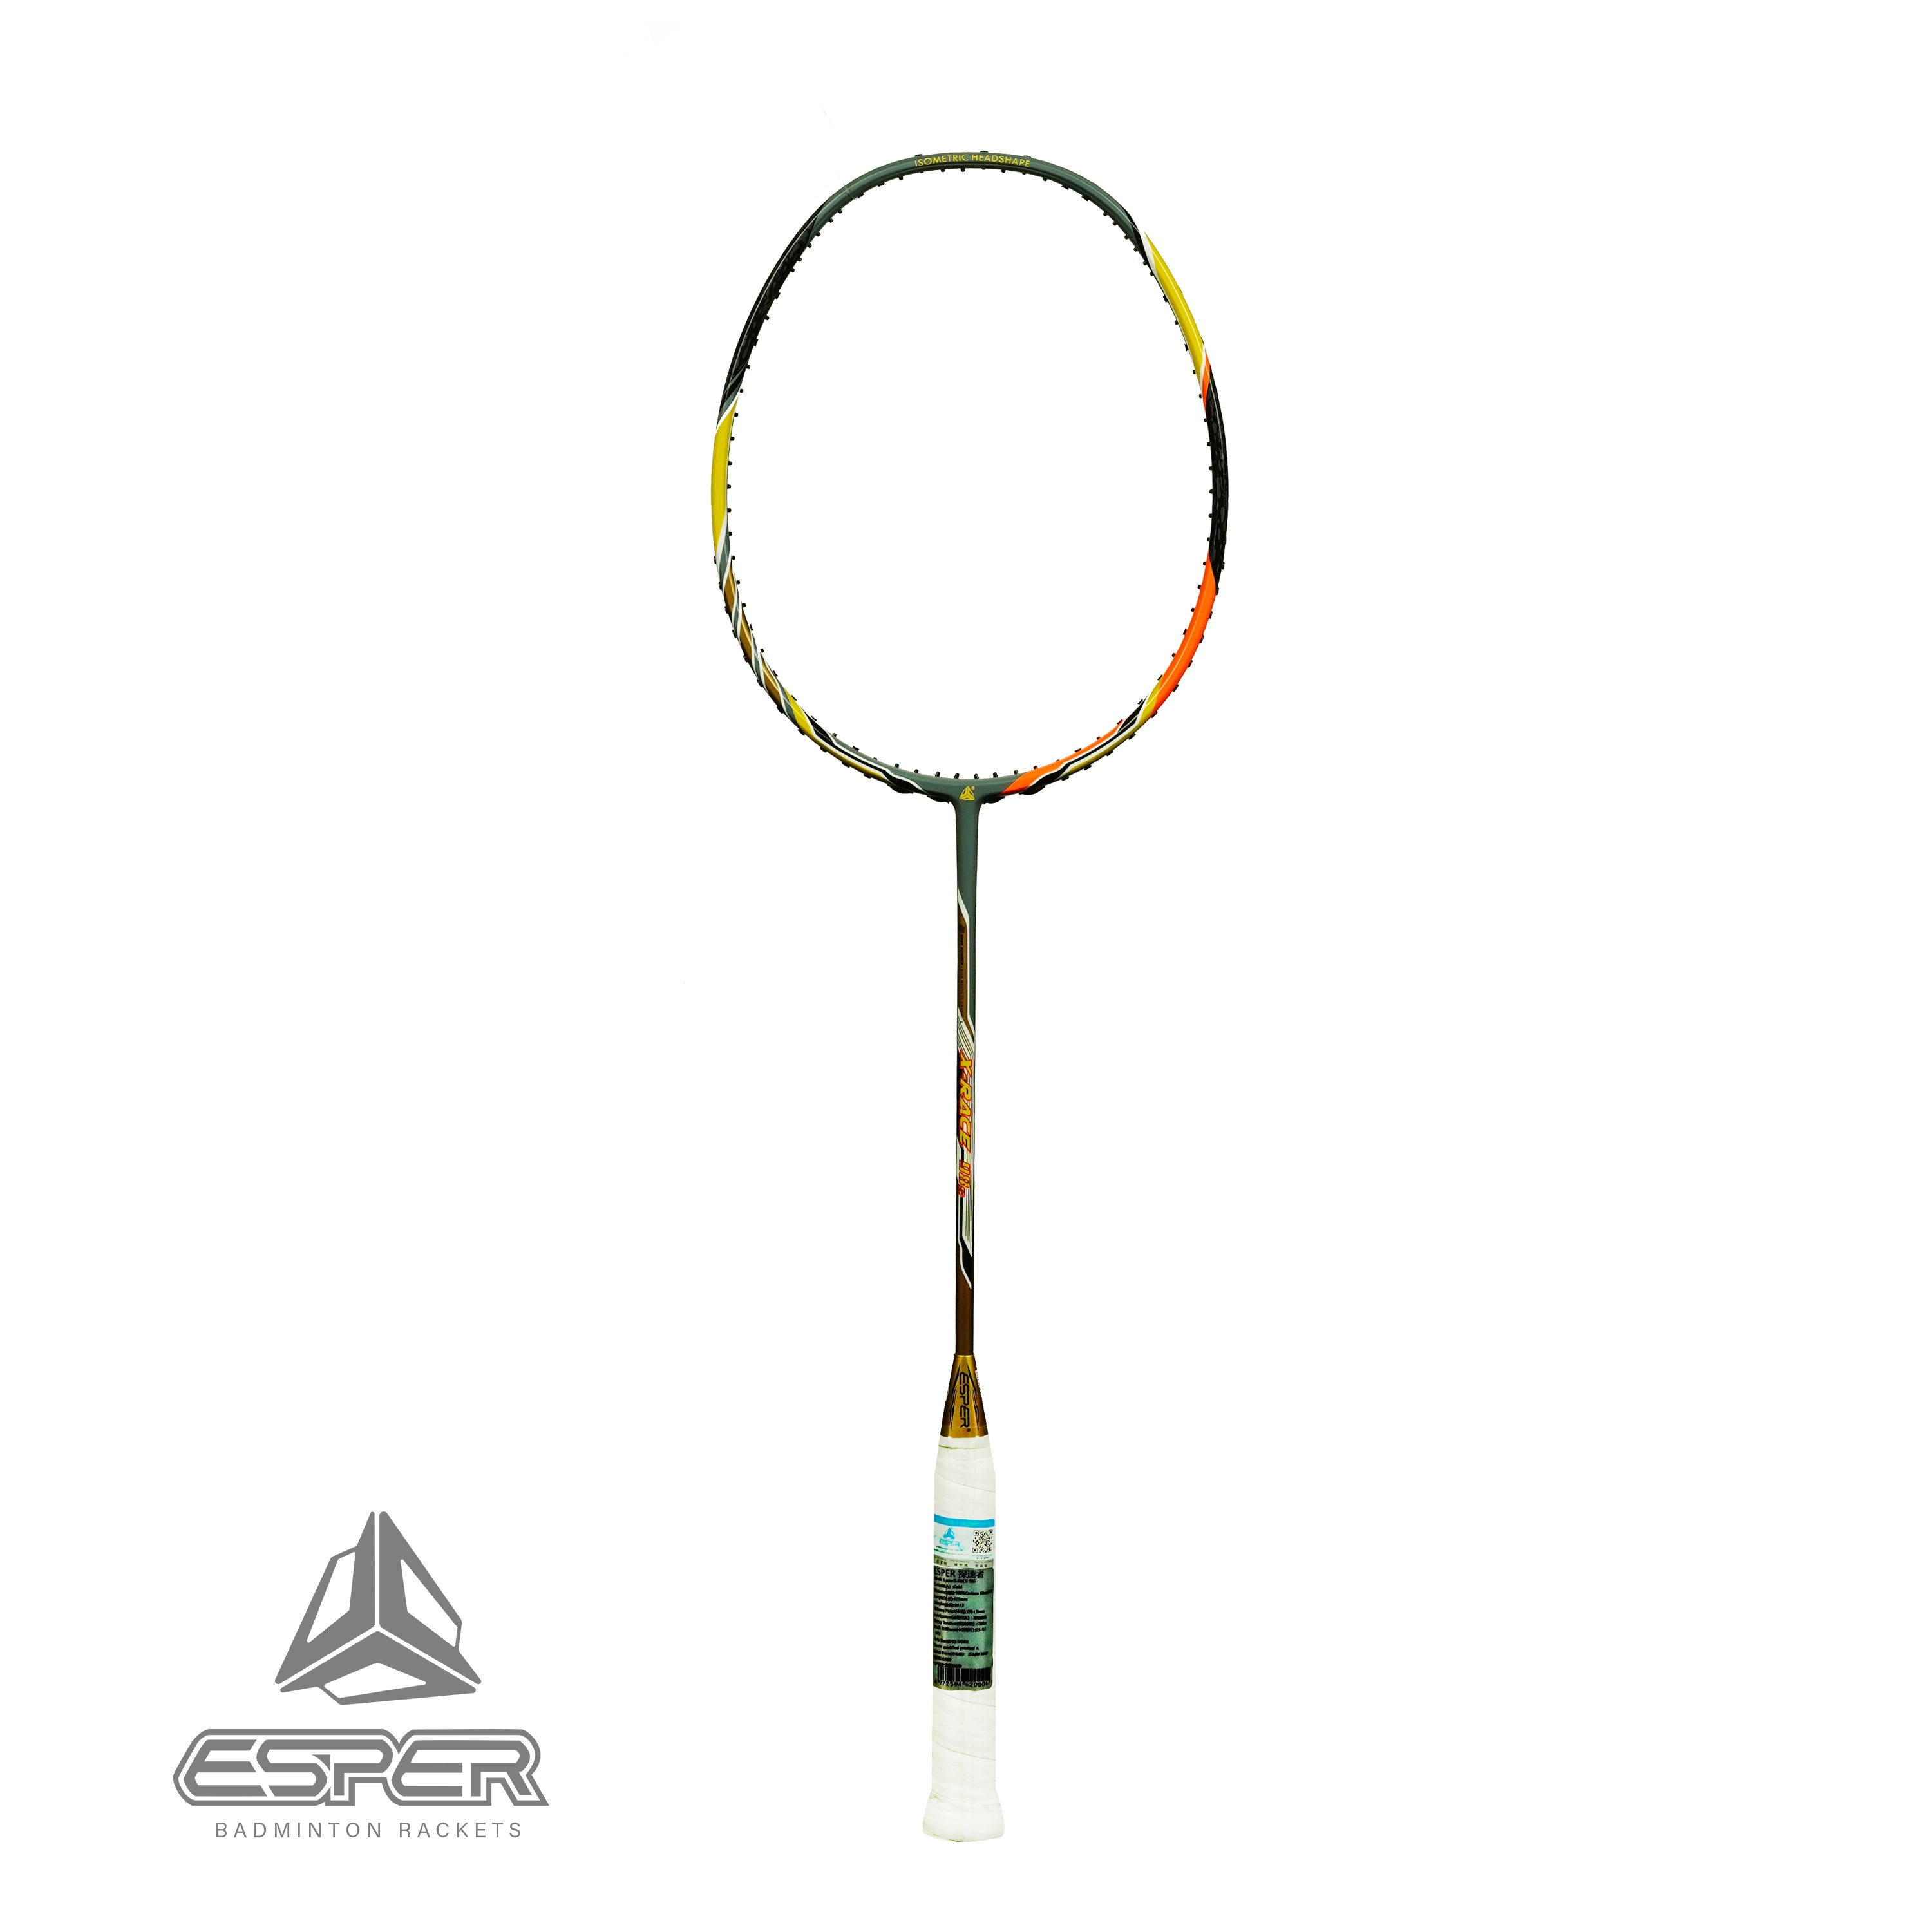 Badminton rackets – Esper BadmintonPH